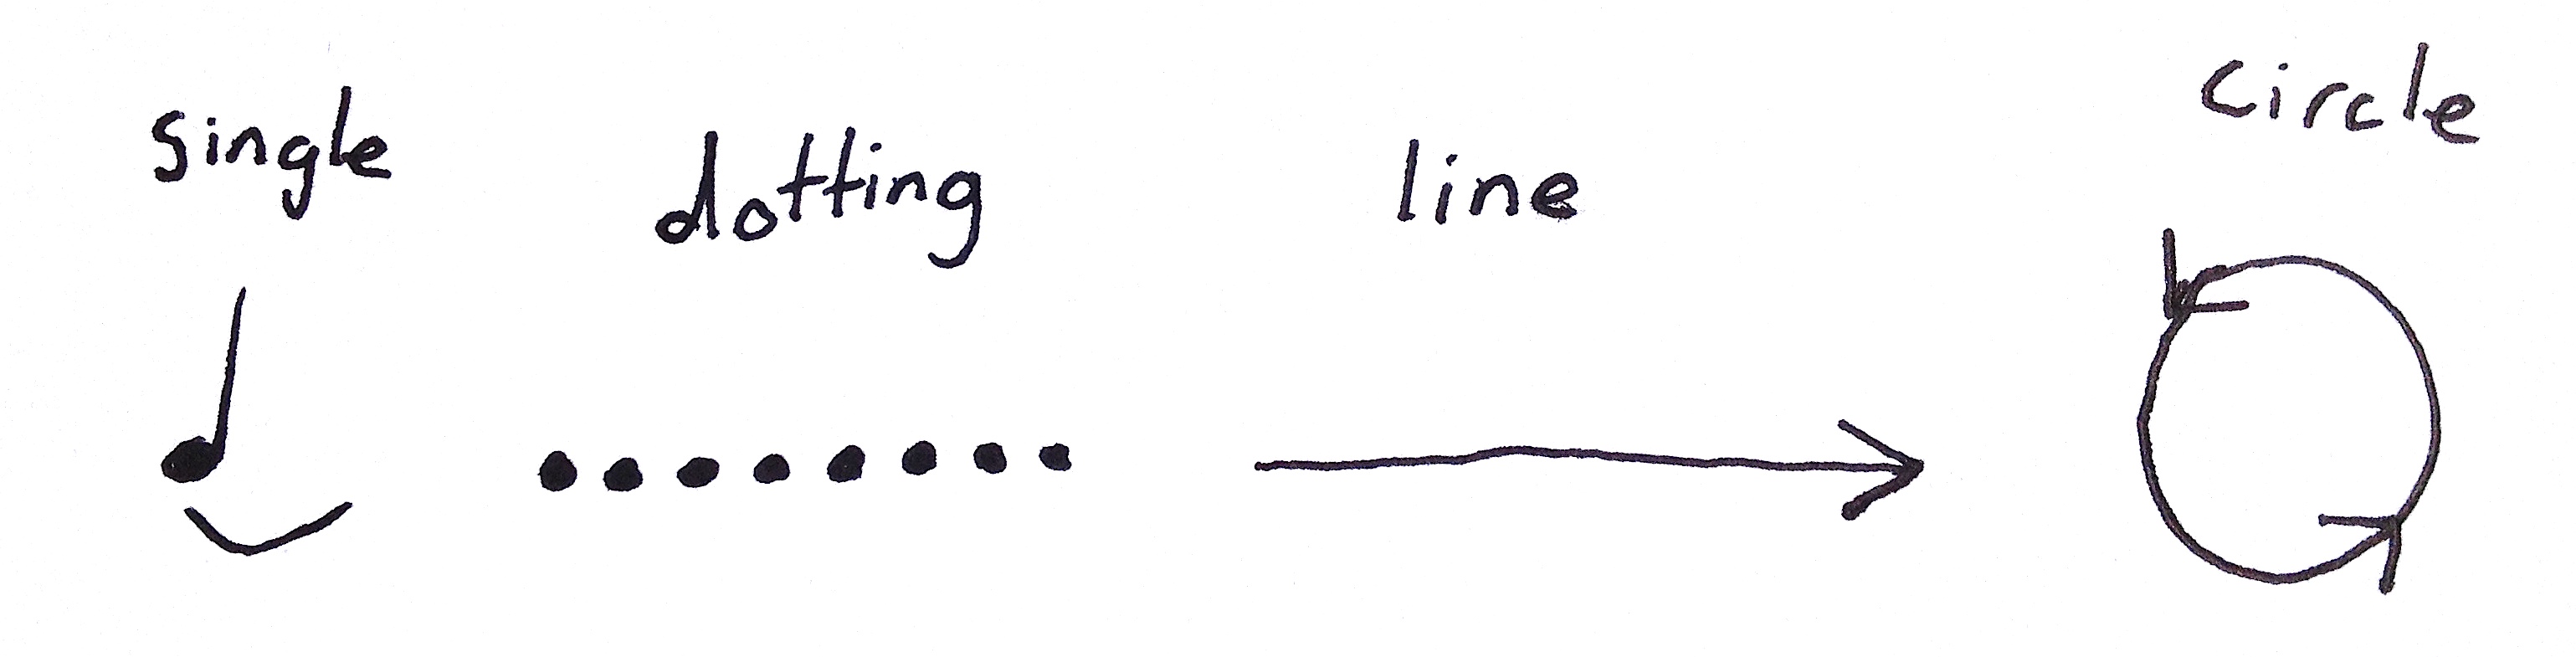 Single dotting line circle